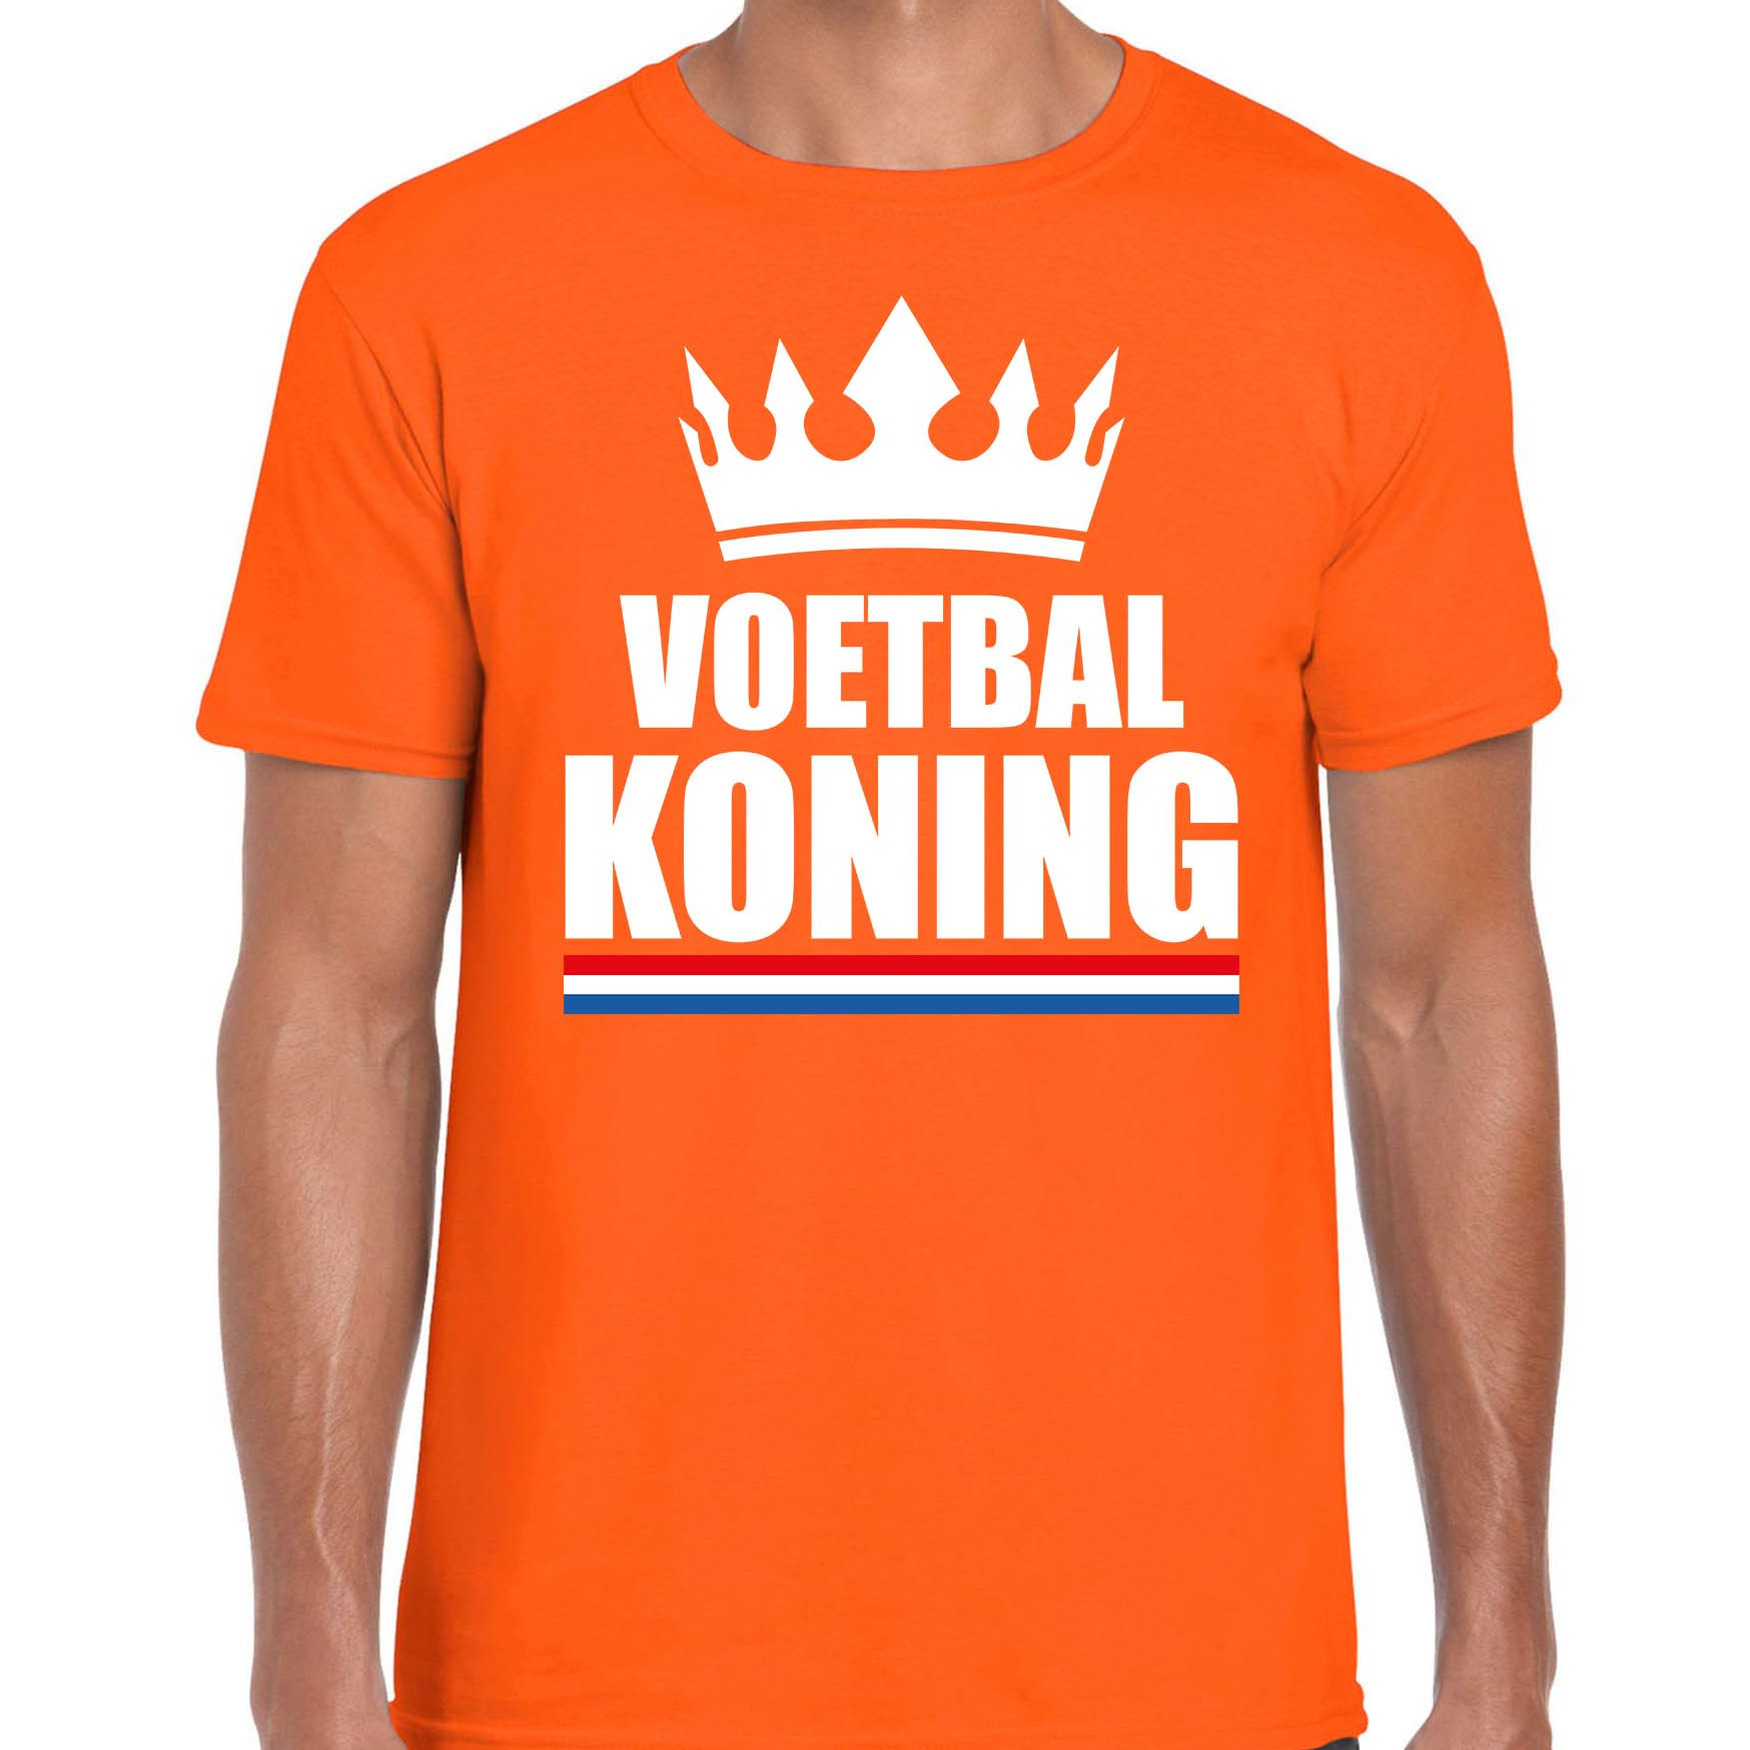 Voetbal koning t-shirt oranje heren - Sport - hobby shirts